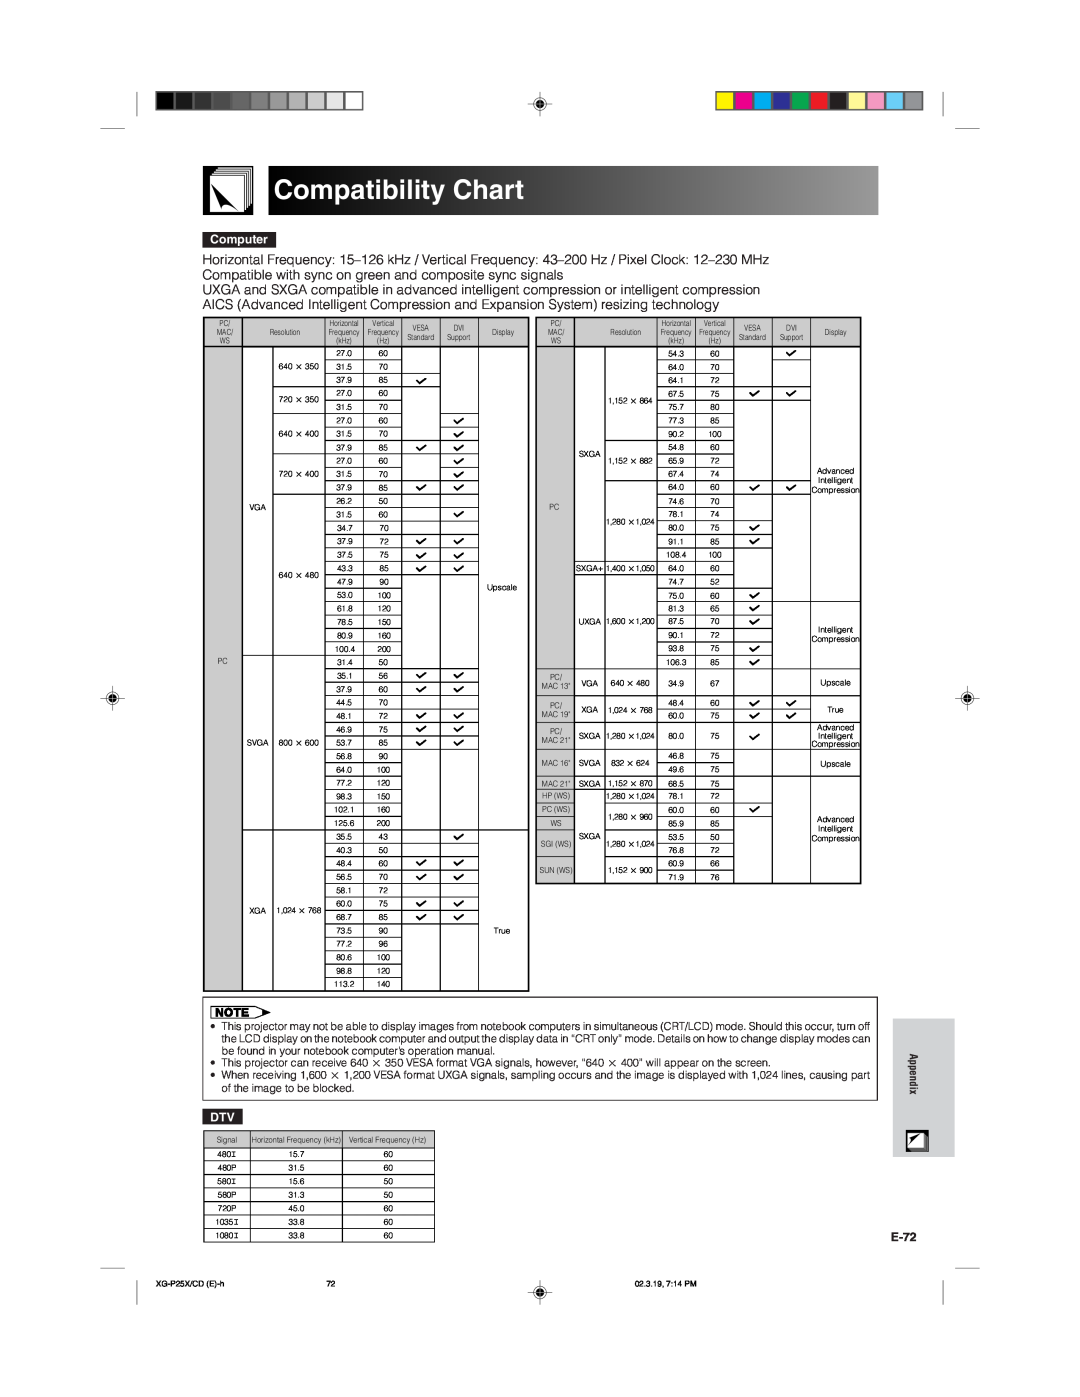 Sharp XG-P25X operation manual Compatibility Chart, Computer, E-72 